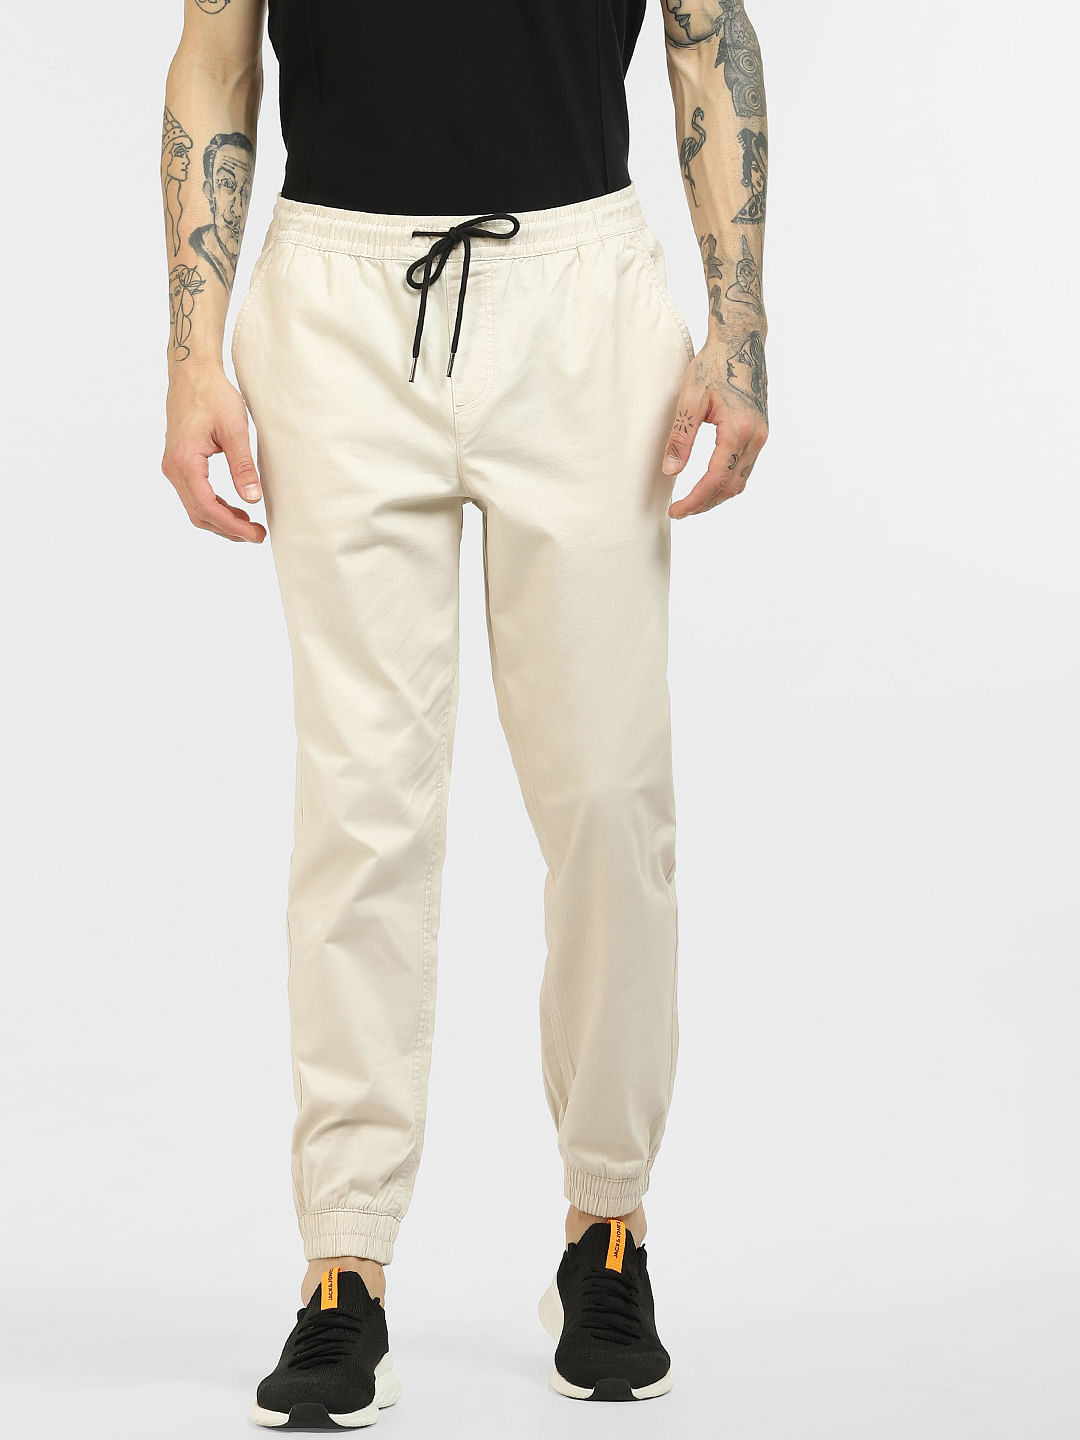 Jack & Jones slacks discount 64% MEN FASHION Trousers Elegant Beige M 